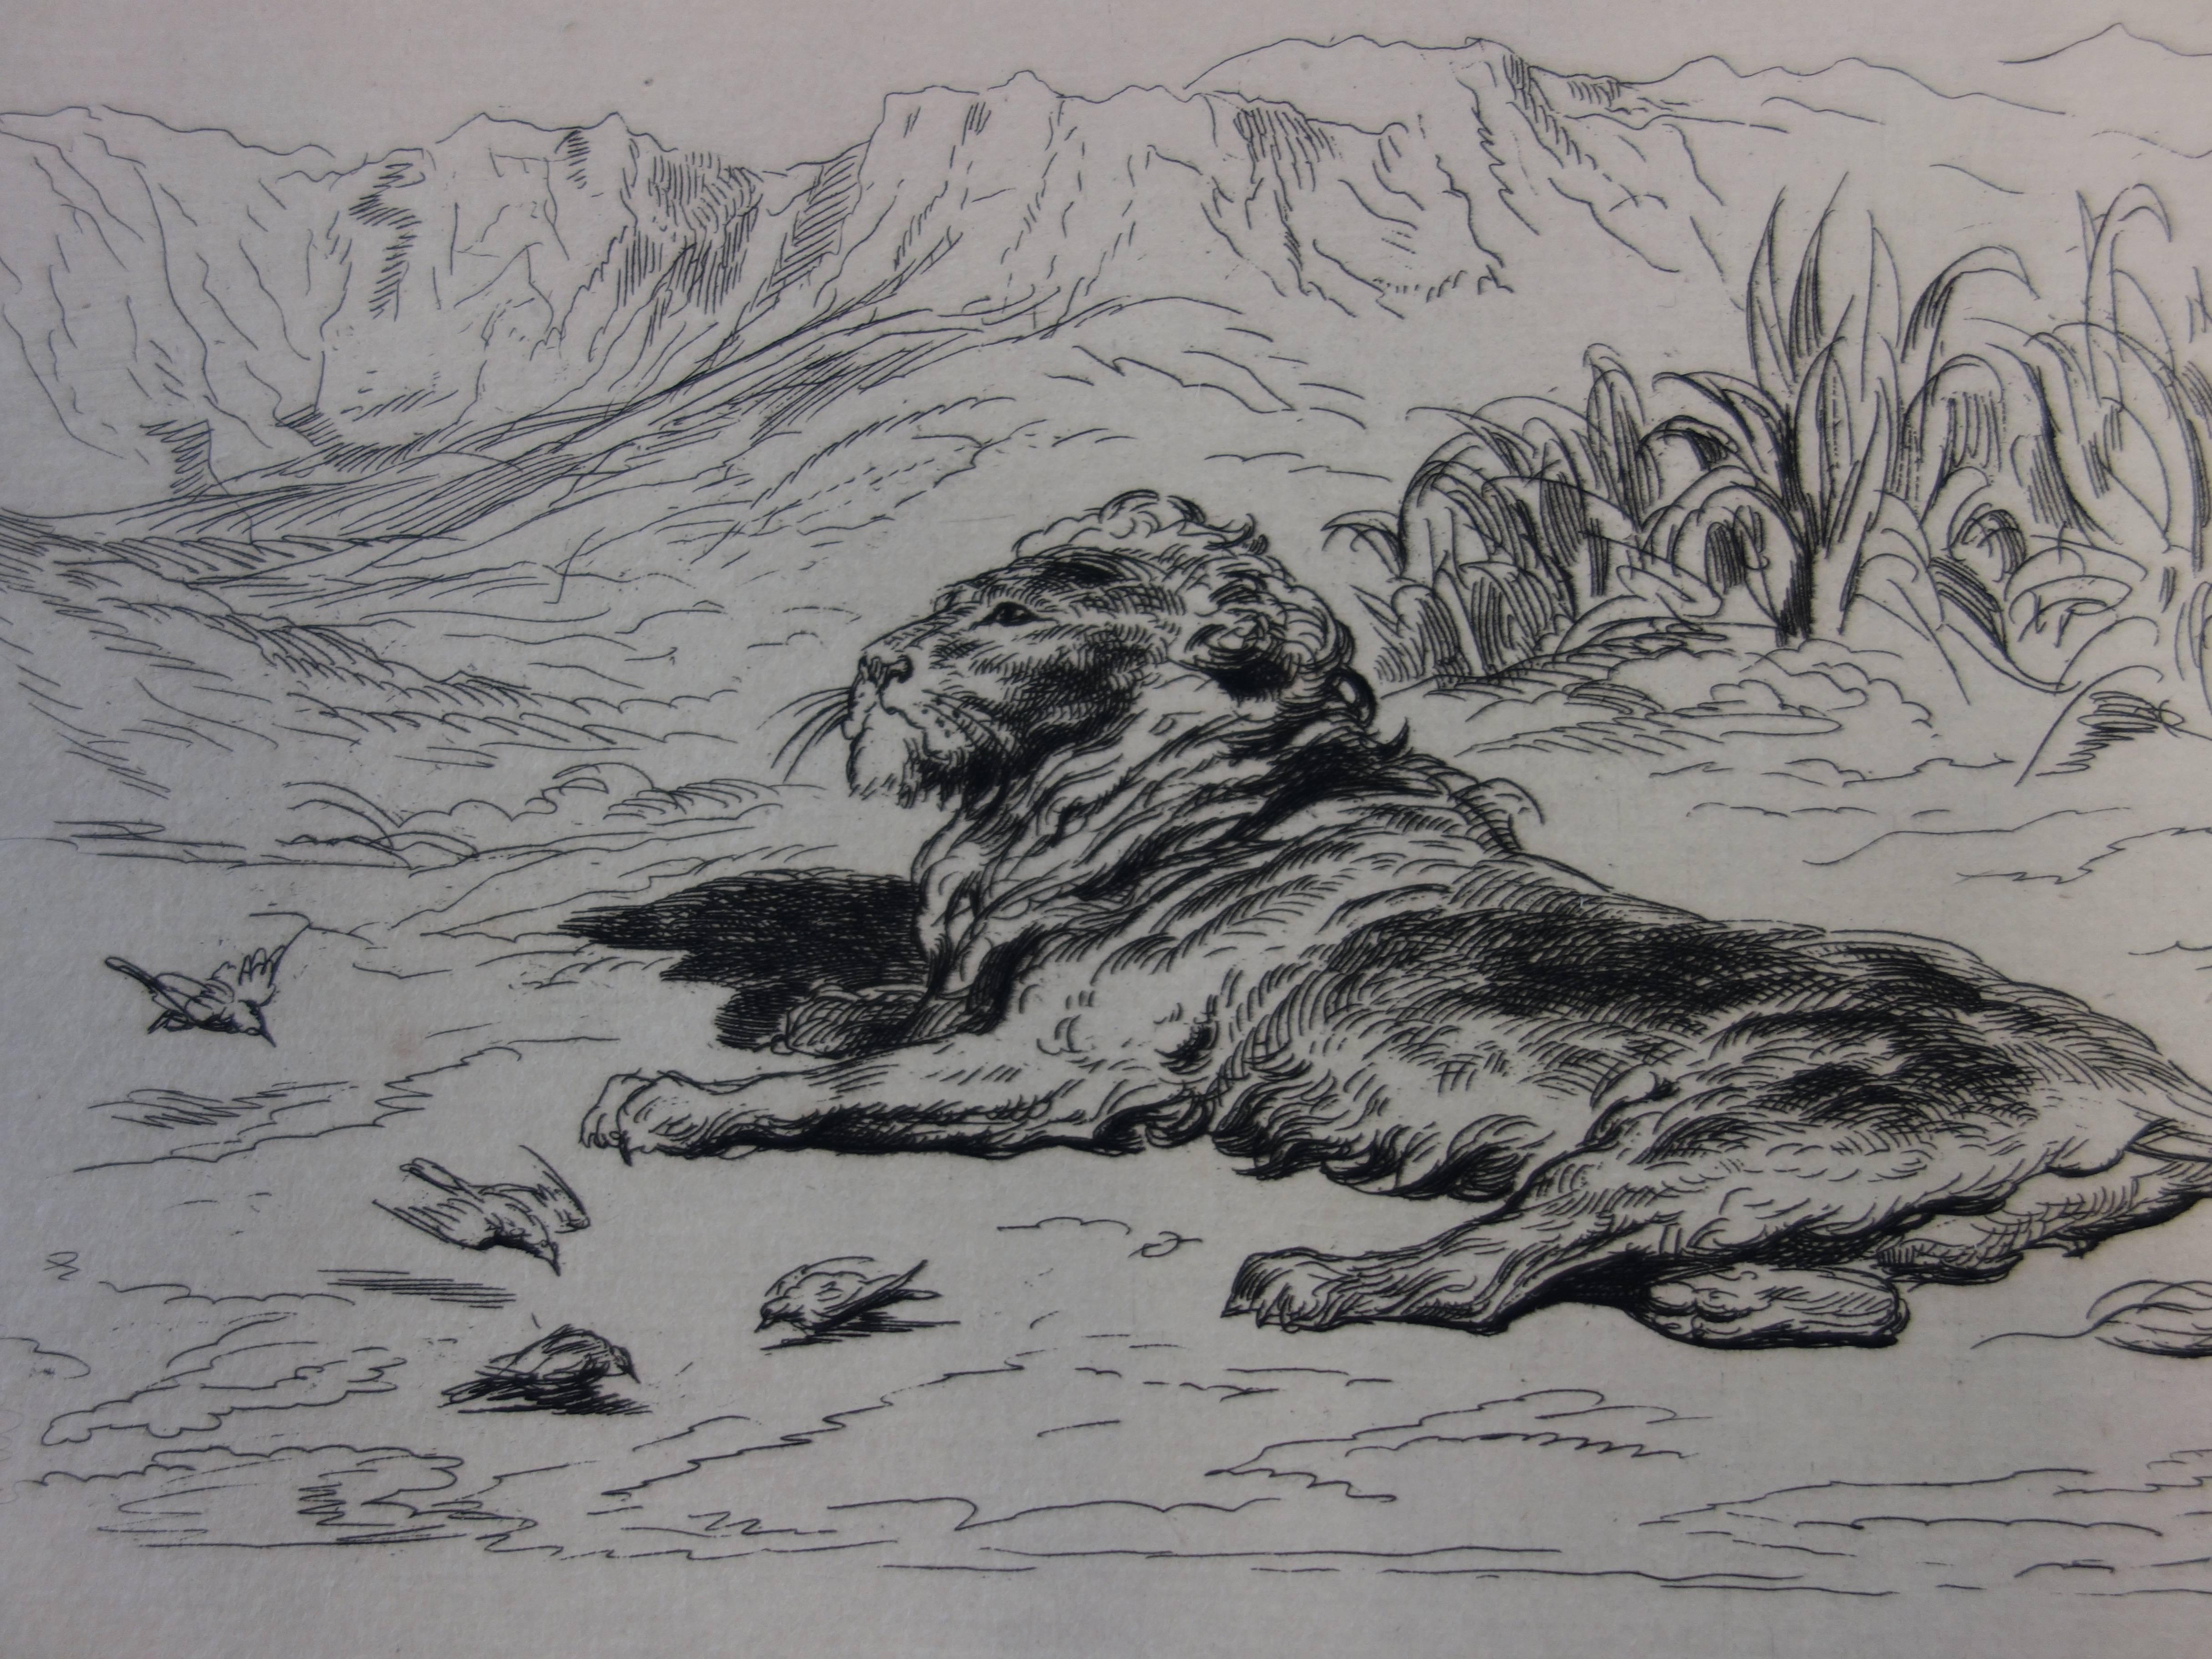 Reclining Lion - Original etching - Impressionist Print by Gustave Doré